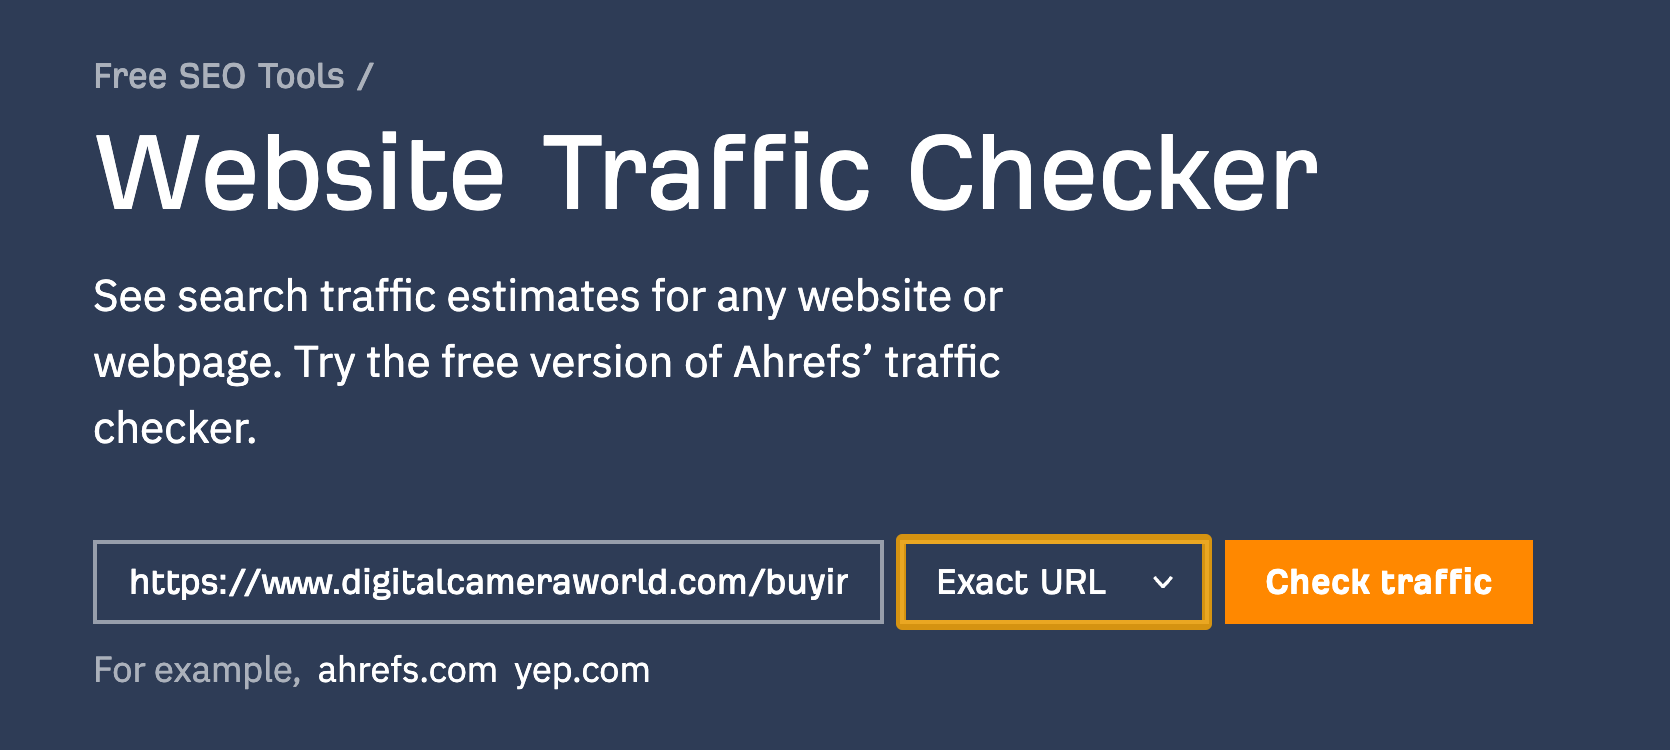 Ahrefs' free website traffic checker